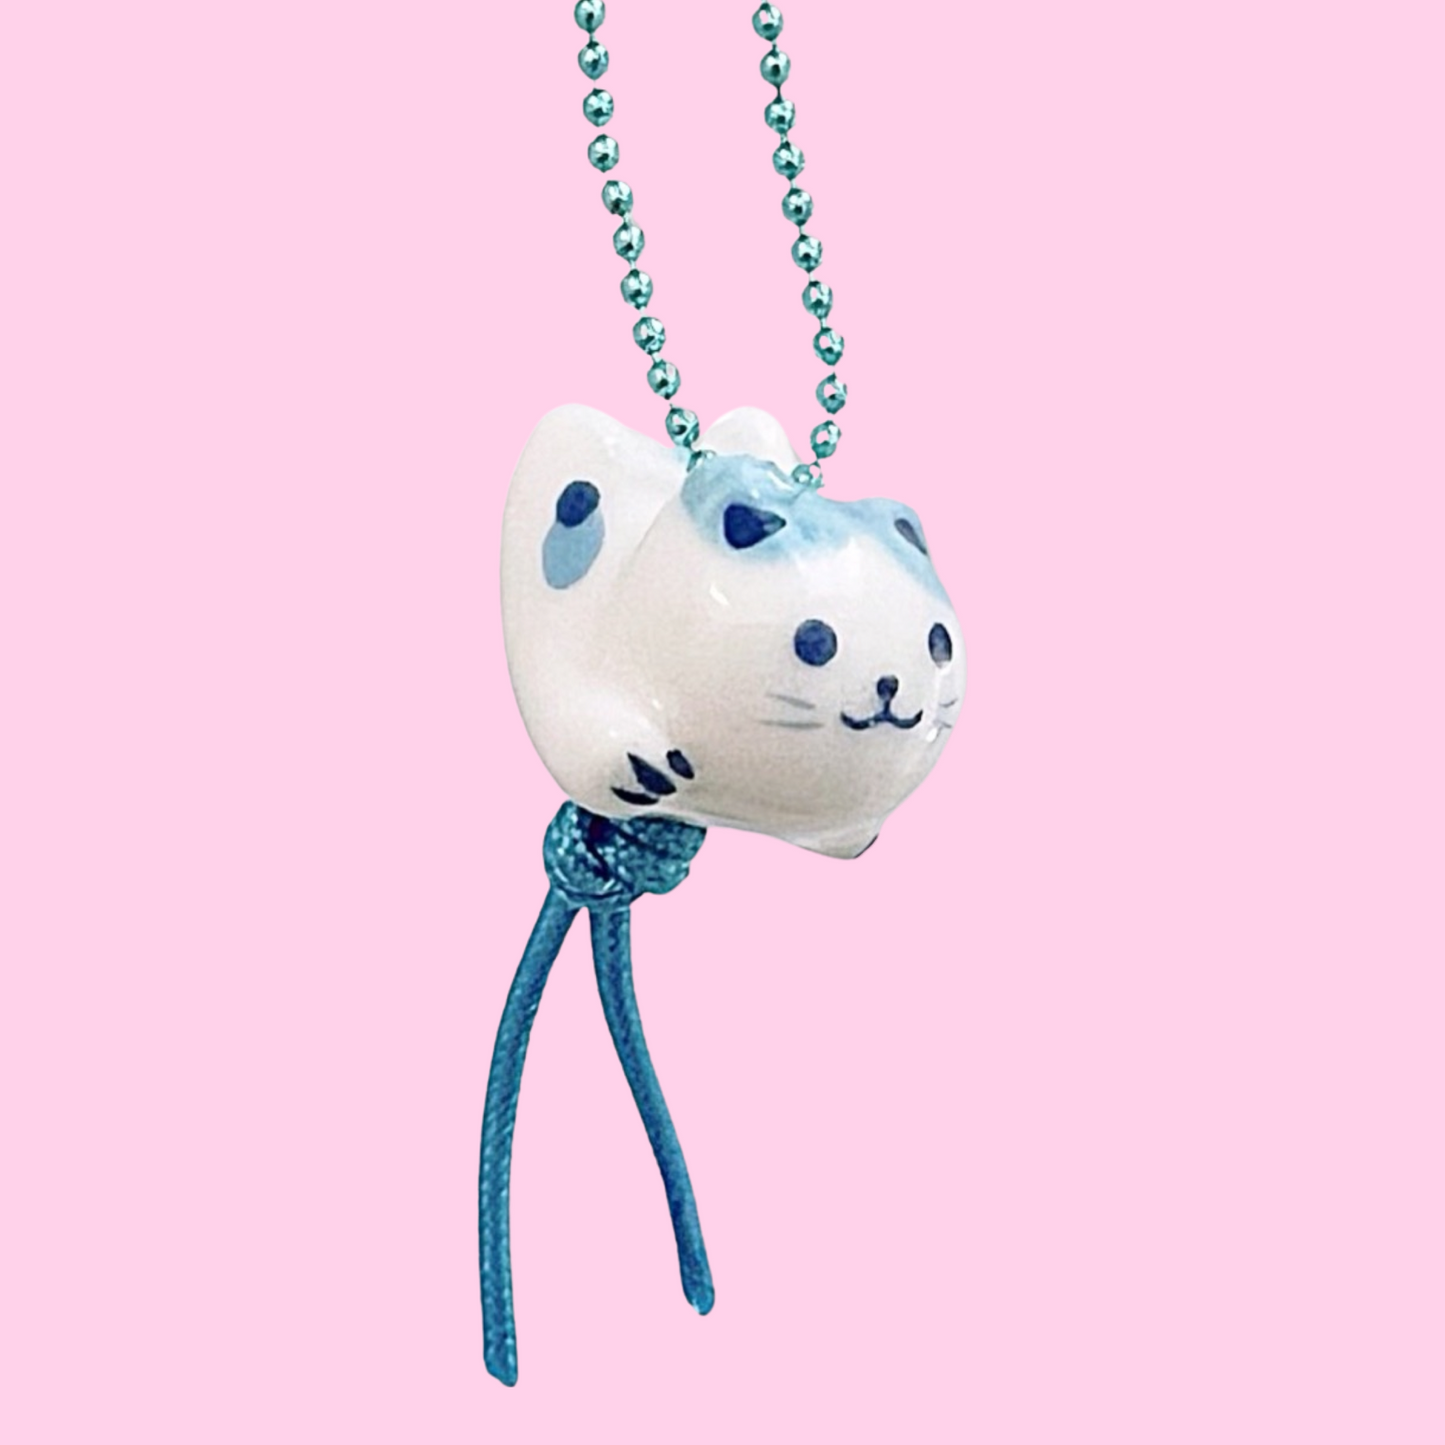 DeLuxe Pop Cutie Porcelain Kitty Necklace Blue